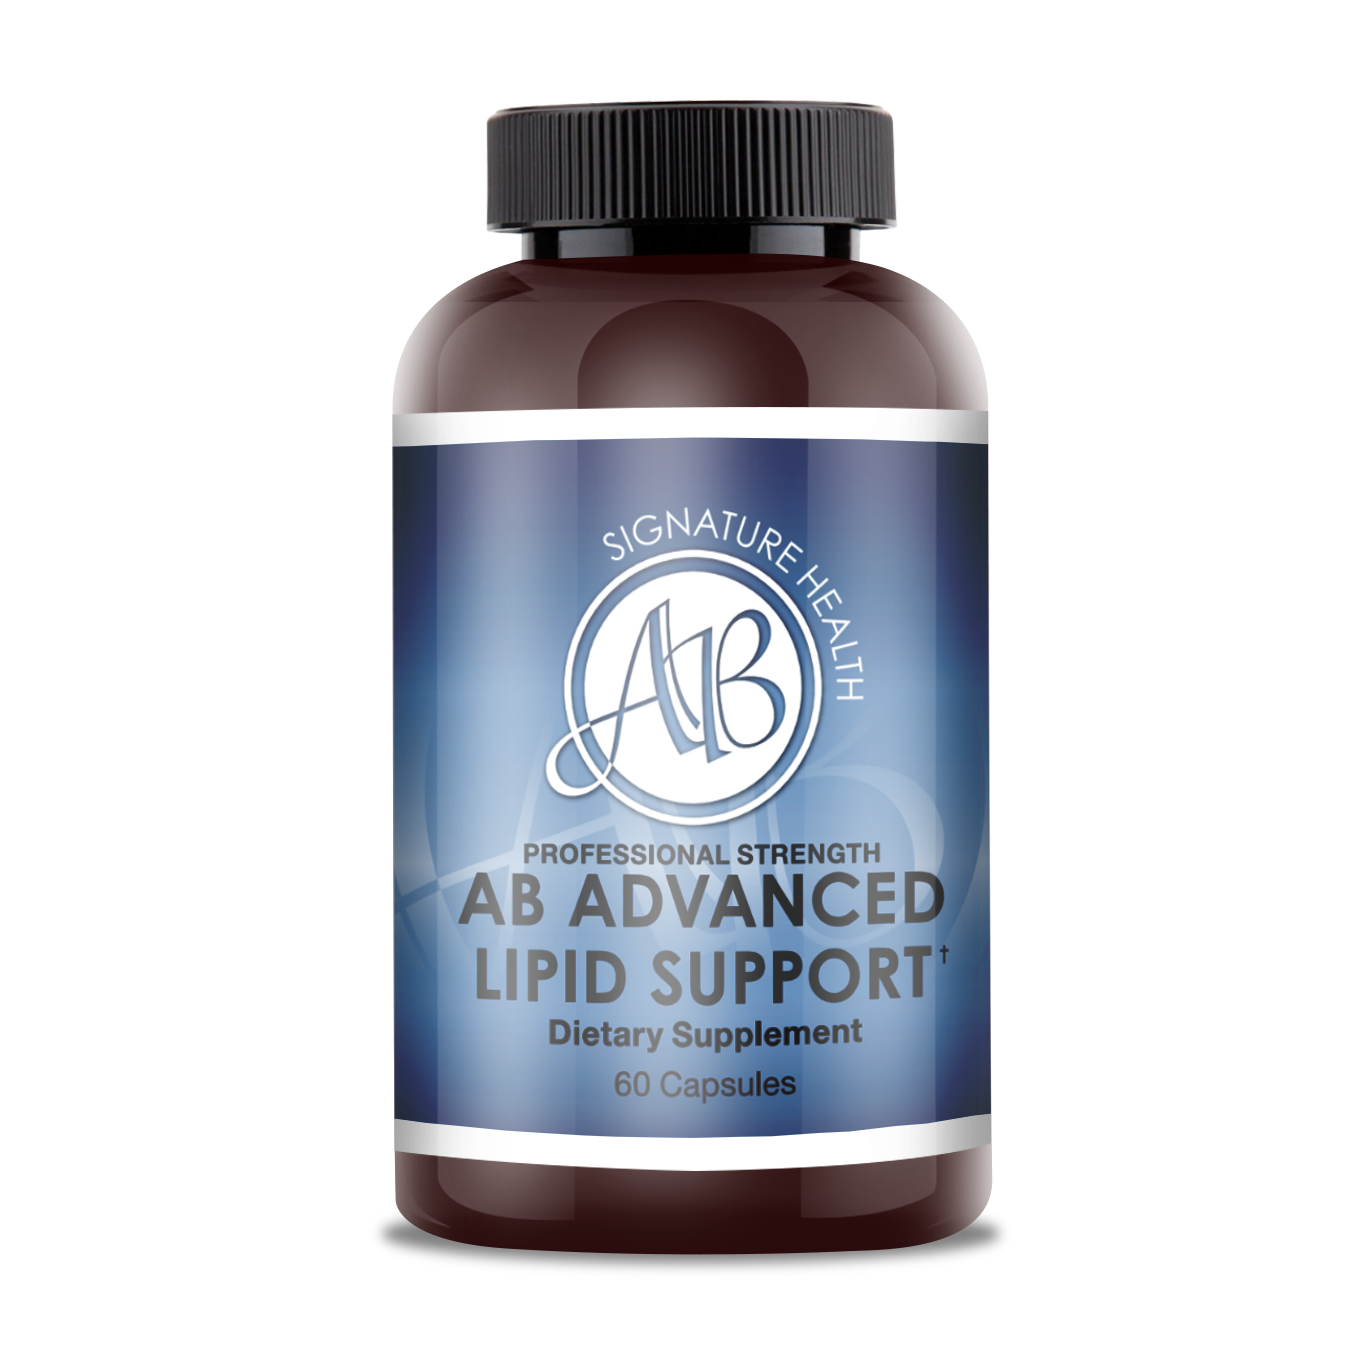 AB Advanced Lipid Support